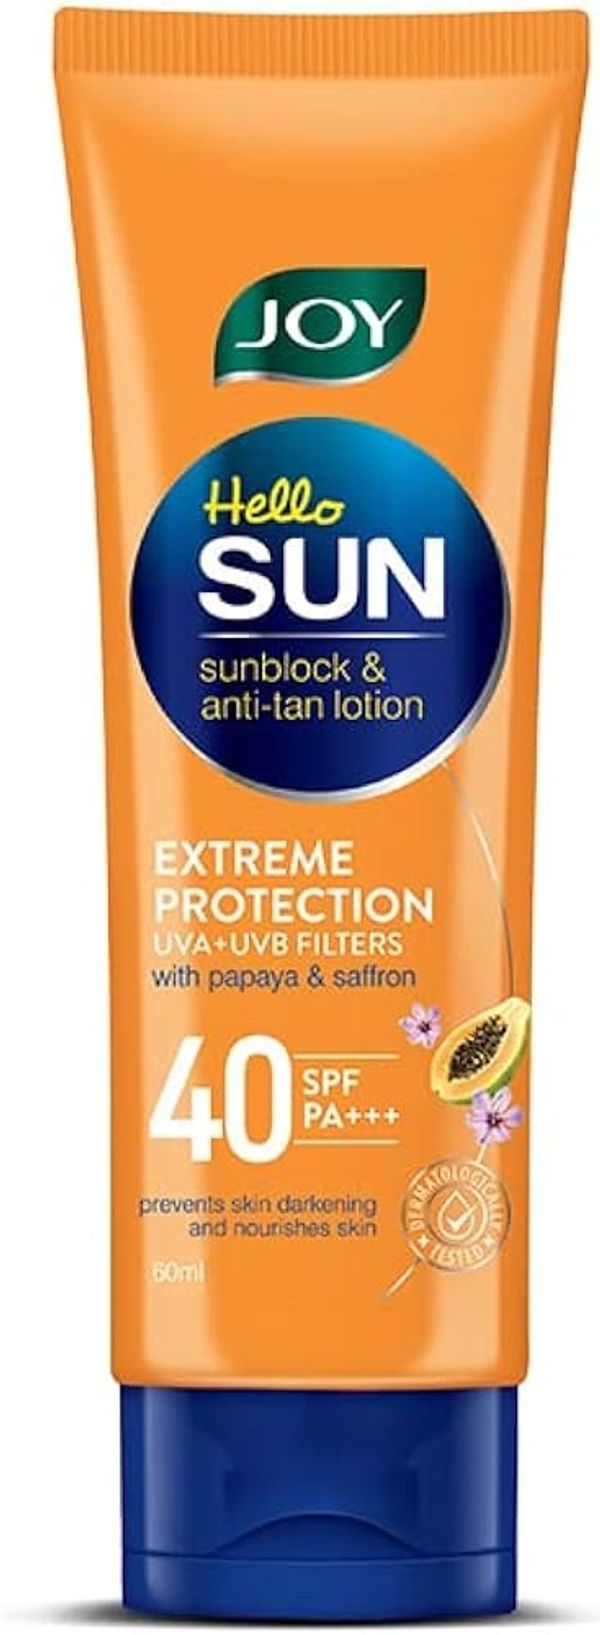 JOY SUN SUNBLOCK & ANTI-TAN LOTION  SBL EXTREME PROTECTION SPF40 60ML